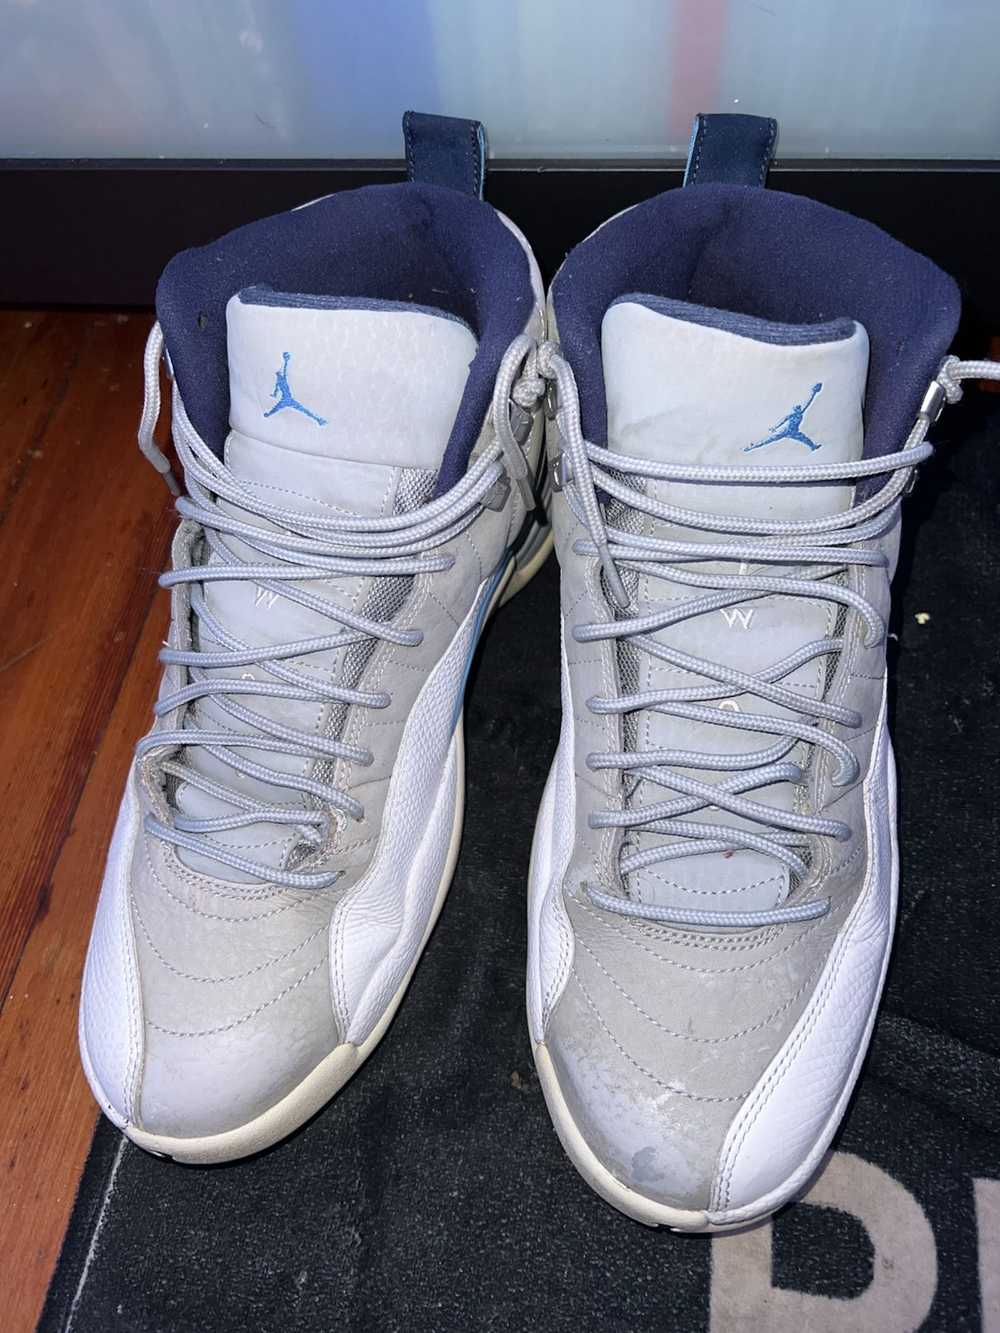 Jordan Brand × Nike Jordan 12 university blue - image 4